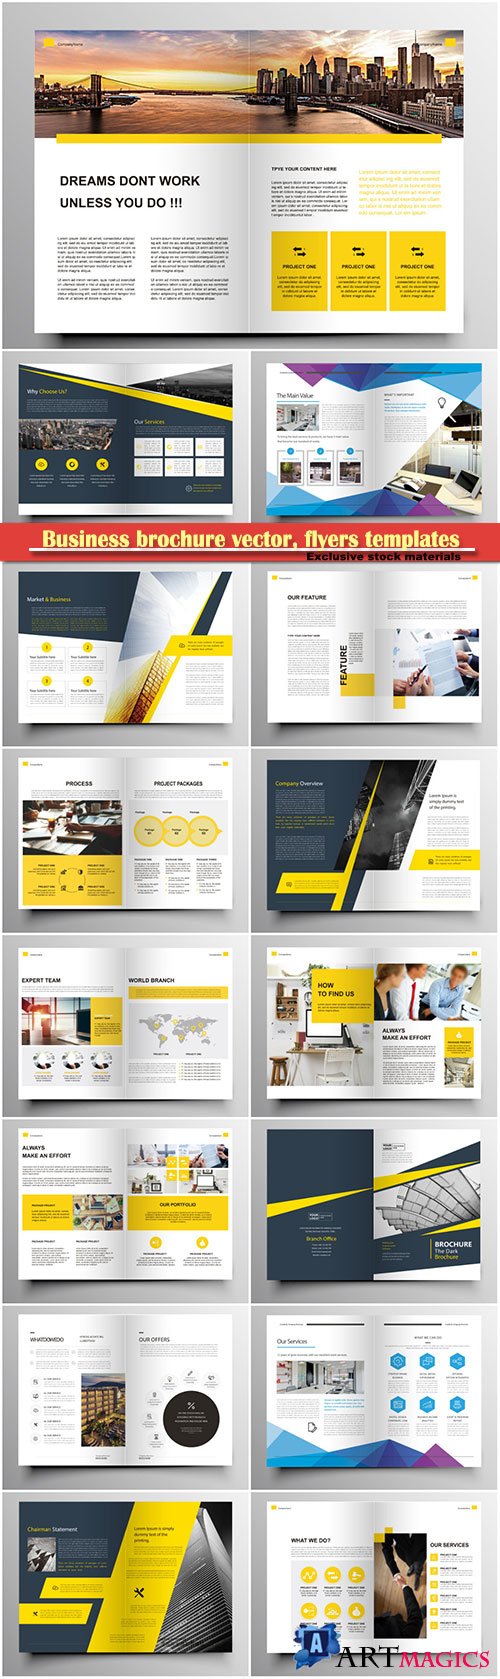 Business brochure vector, flyers templates, report cover design # 96